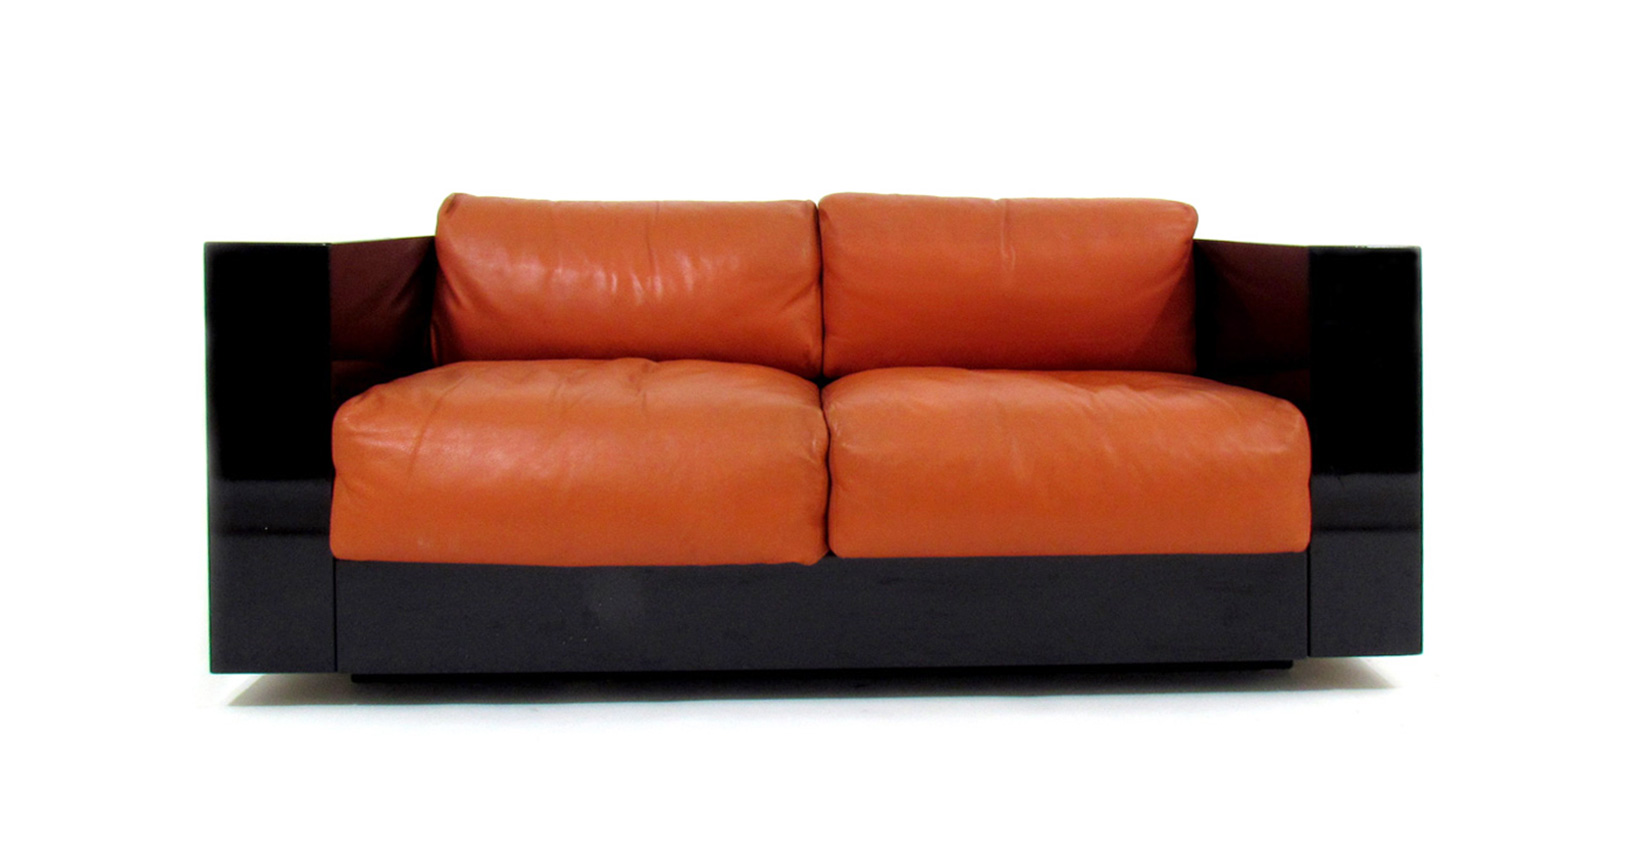 Saratoga Poltronova Vignelli associates Leather sofa divano pelle